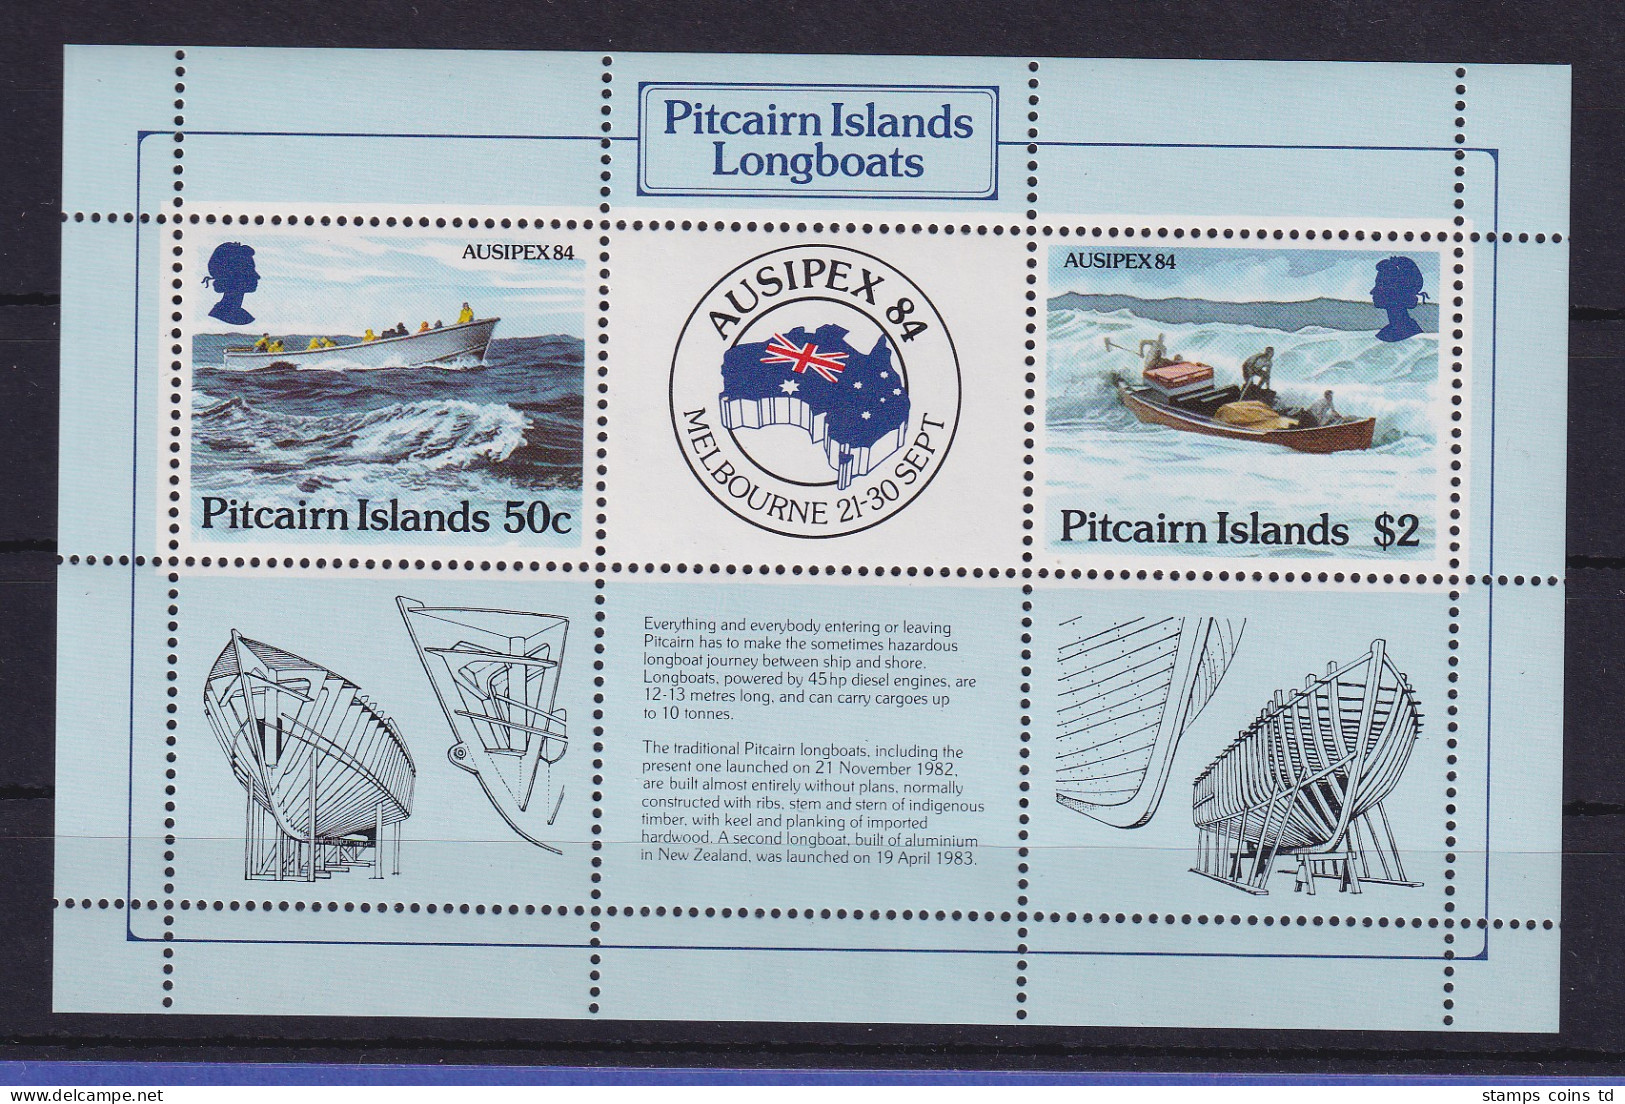 Pitcairn Islands 1984 Briefmarkenausstellung AUSIPEX 84 Mi.-Nr. Block 7 ** - Pitcairninsel